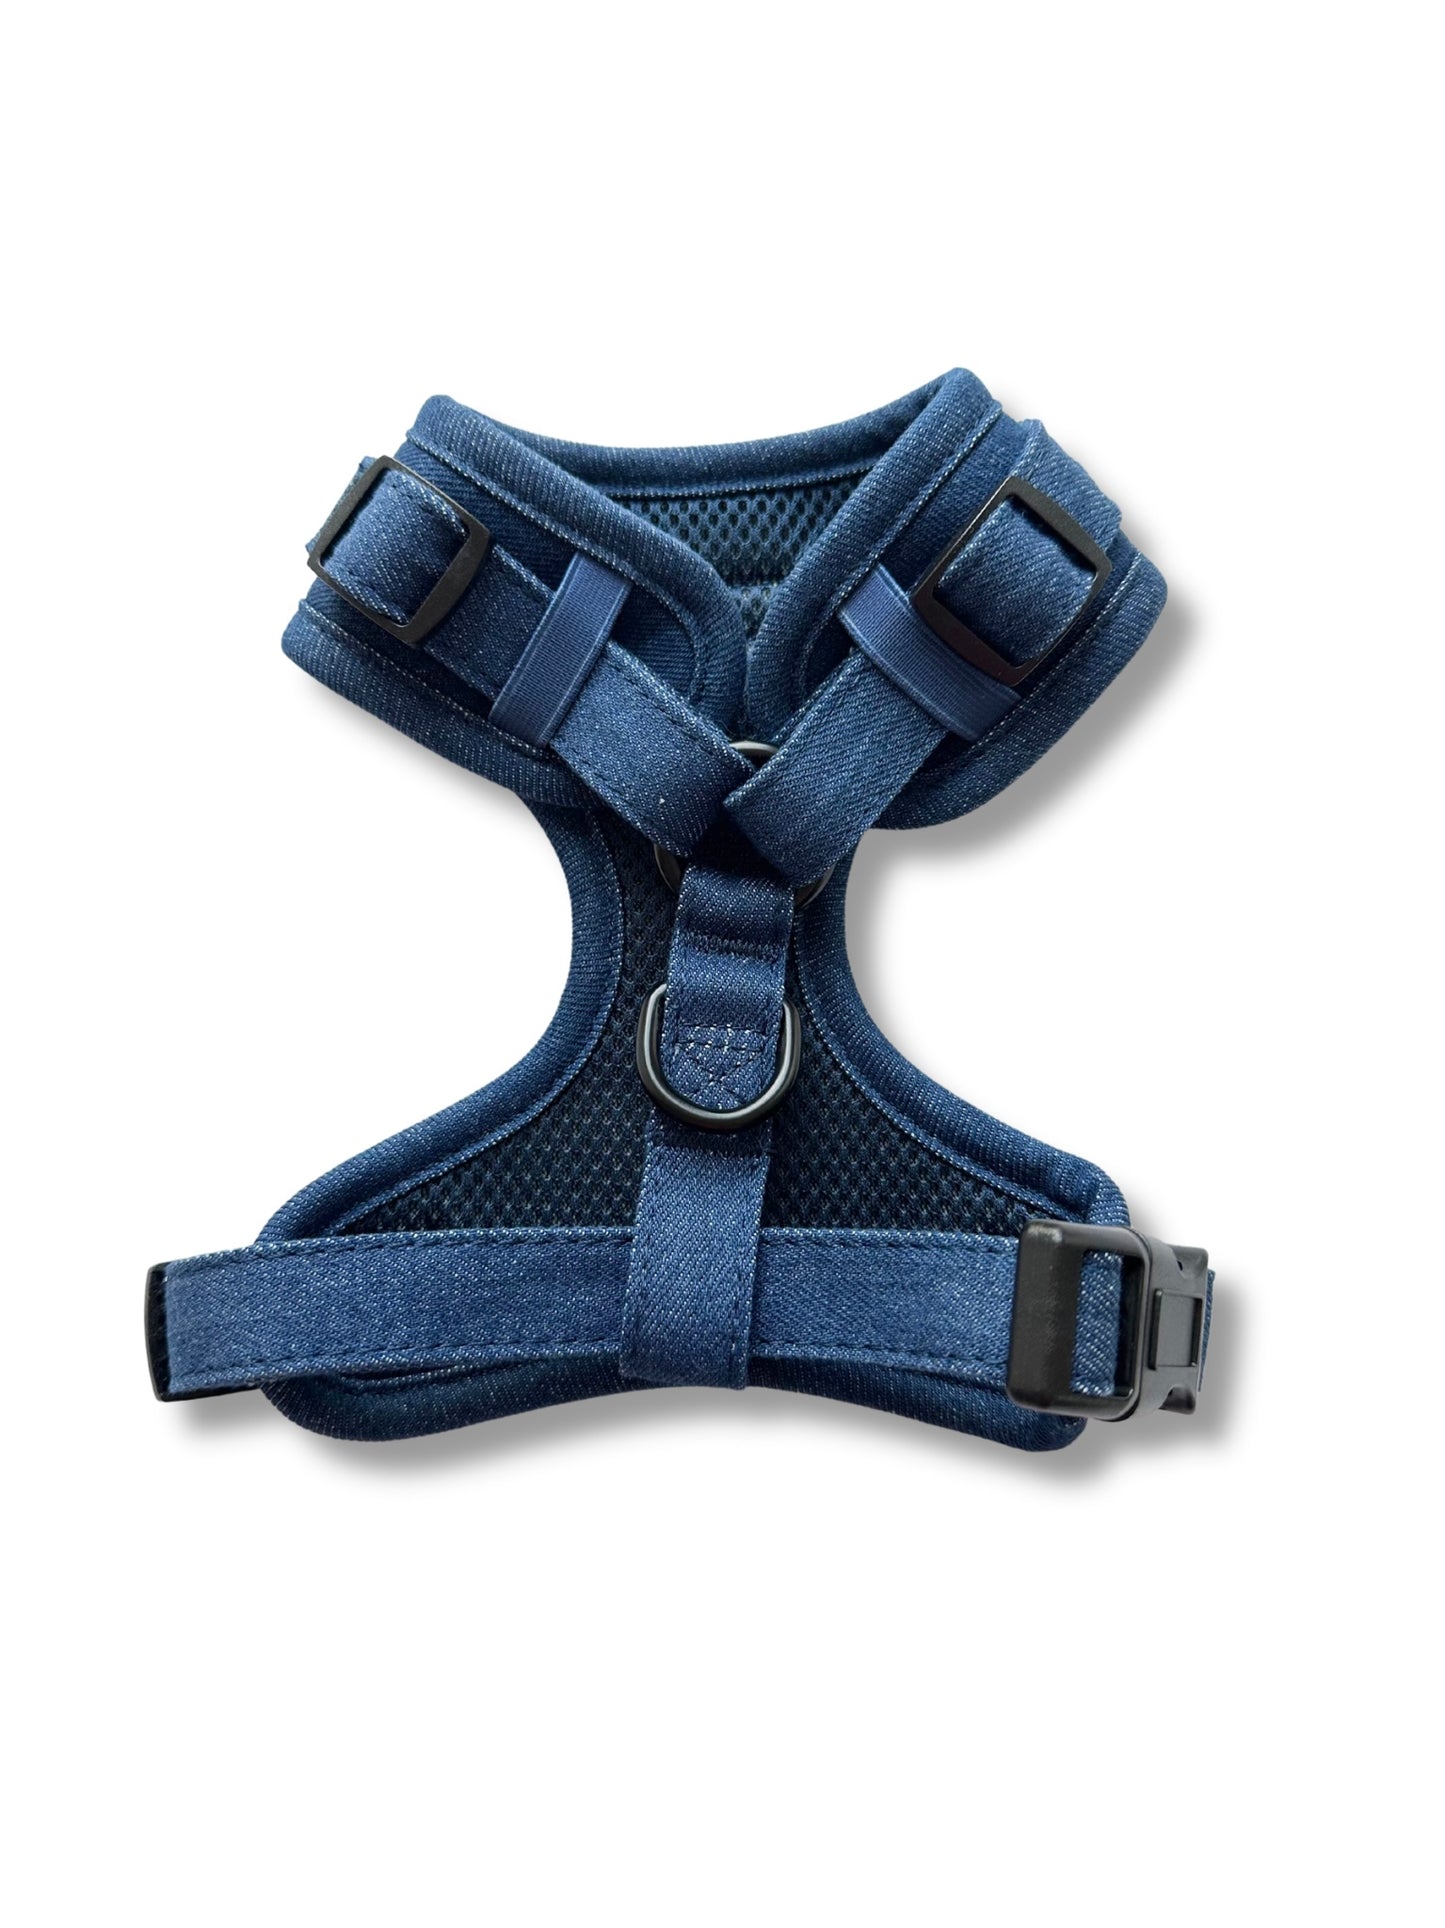 Adjustable Harness - Blue Jeans